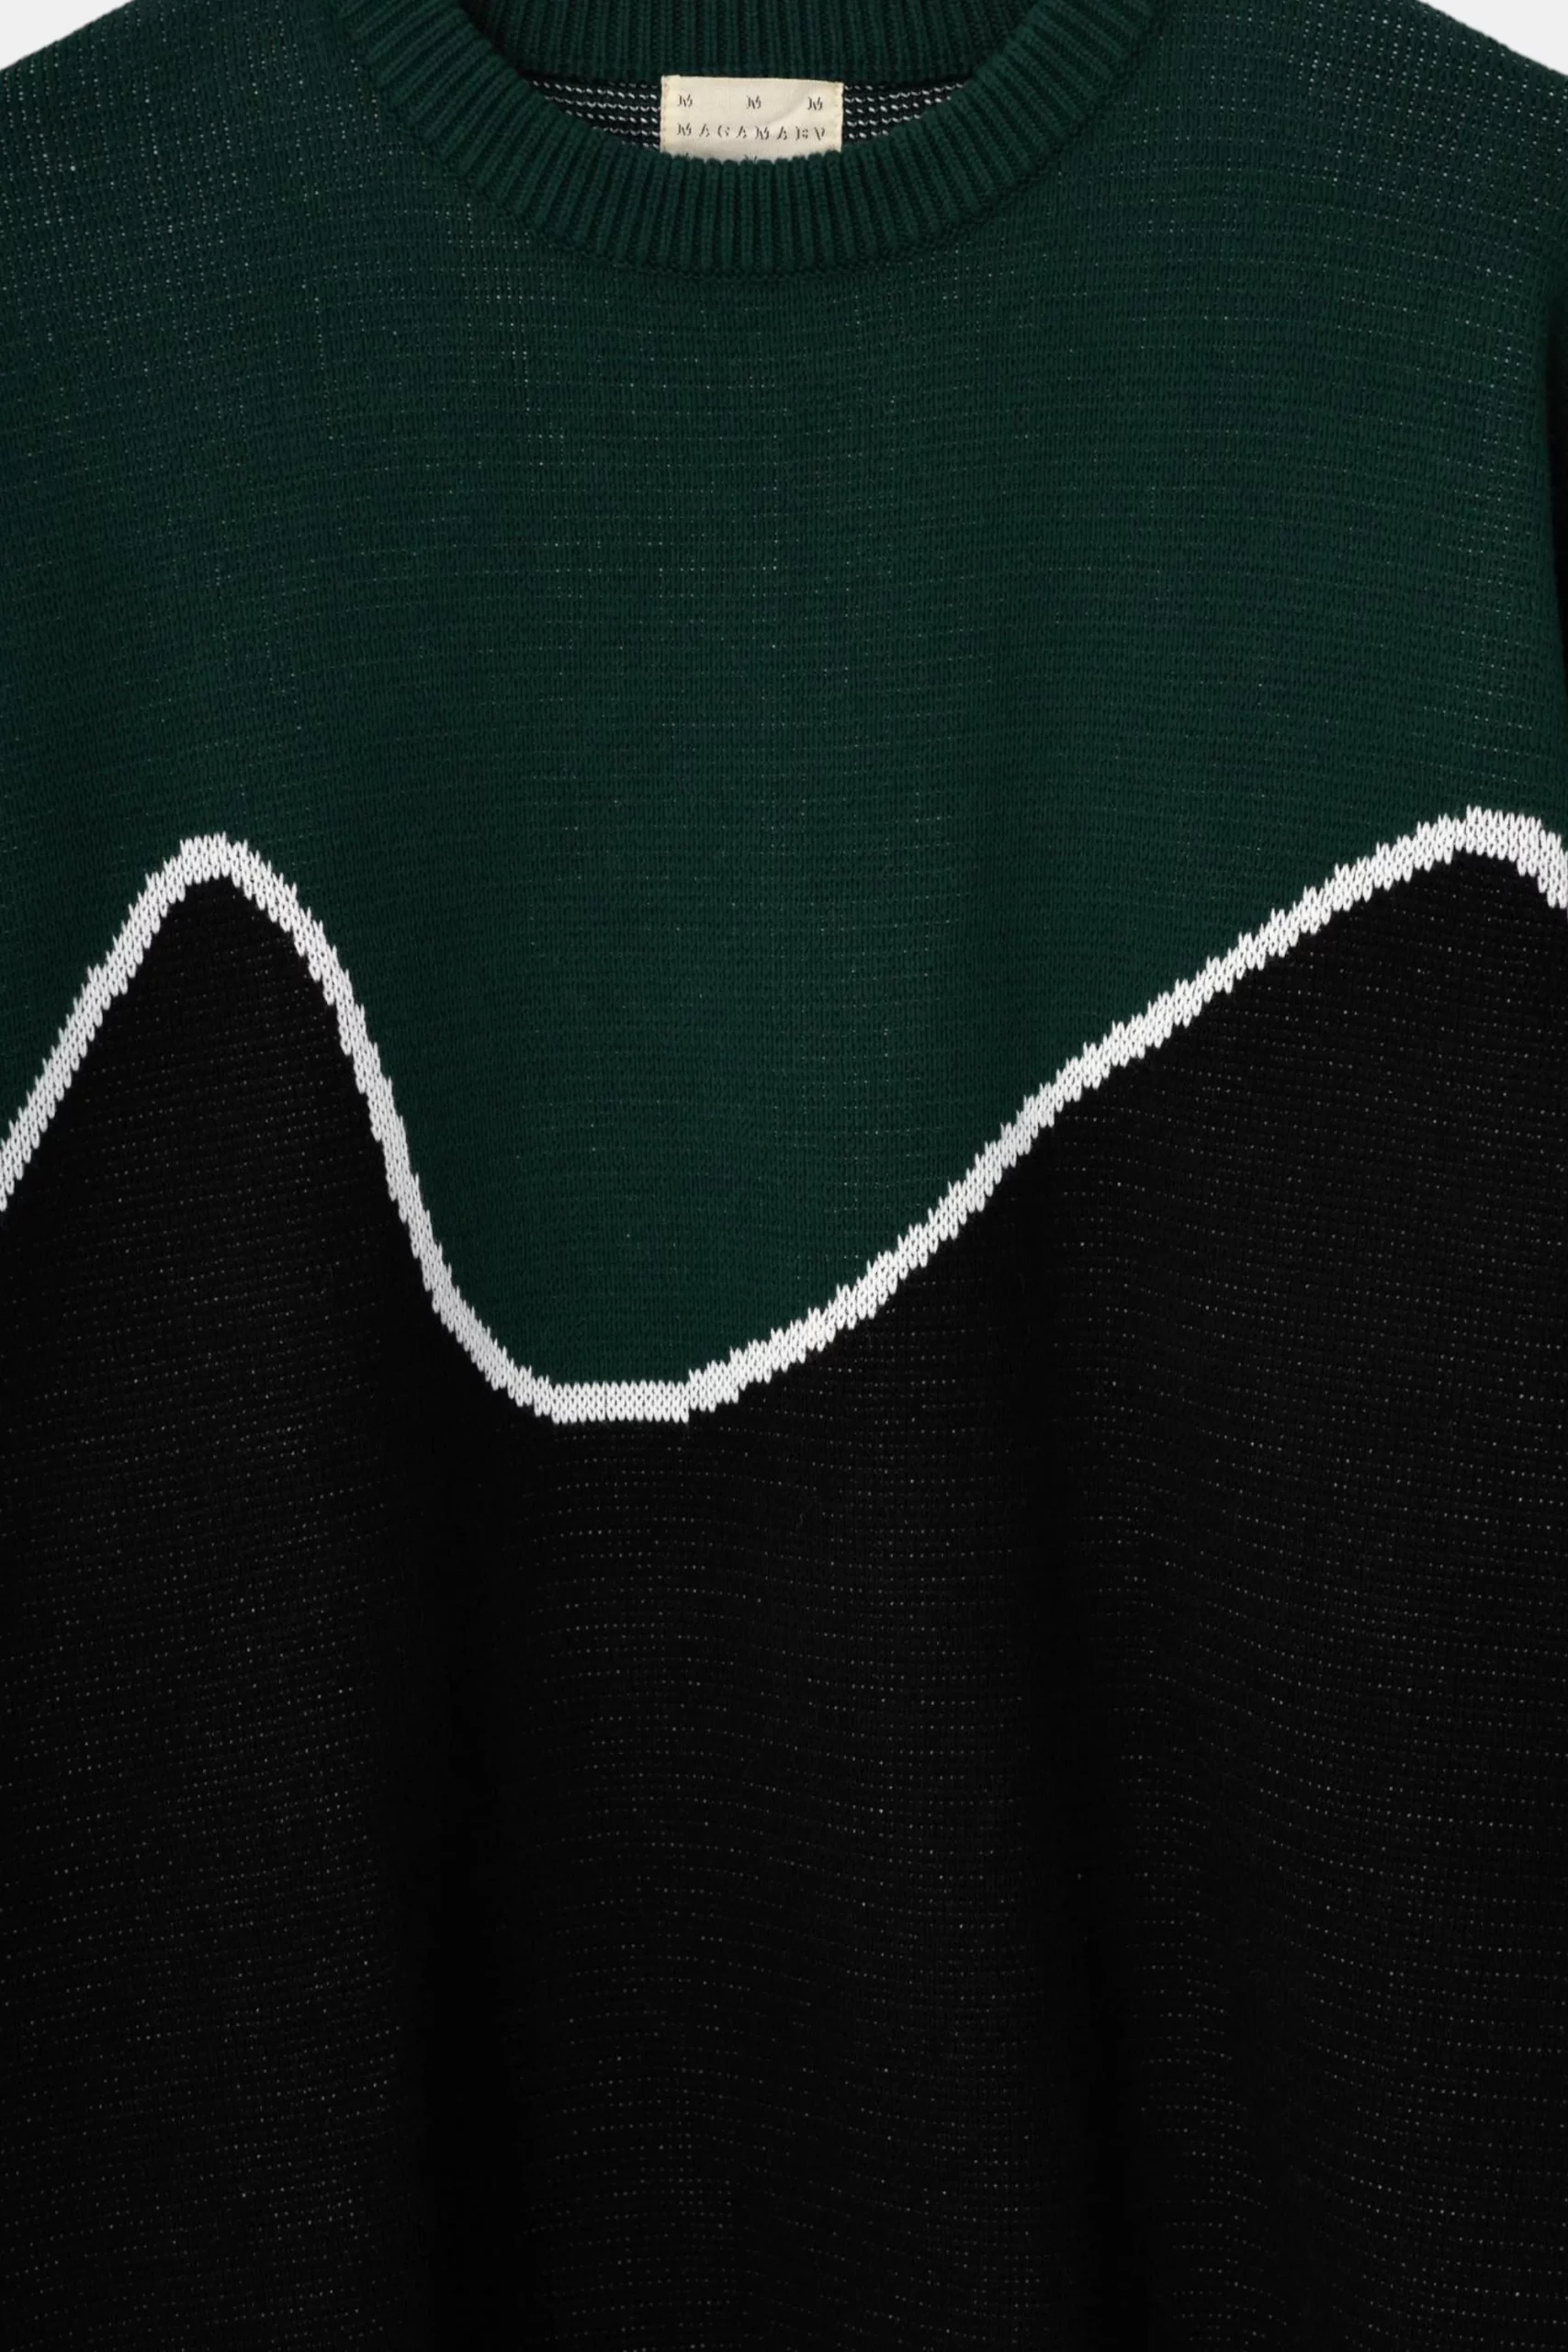 sviter magamaev big knit black green 2